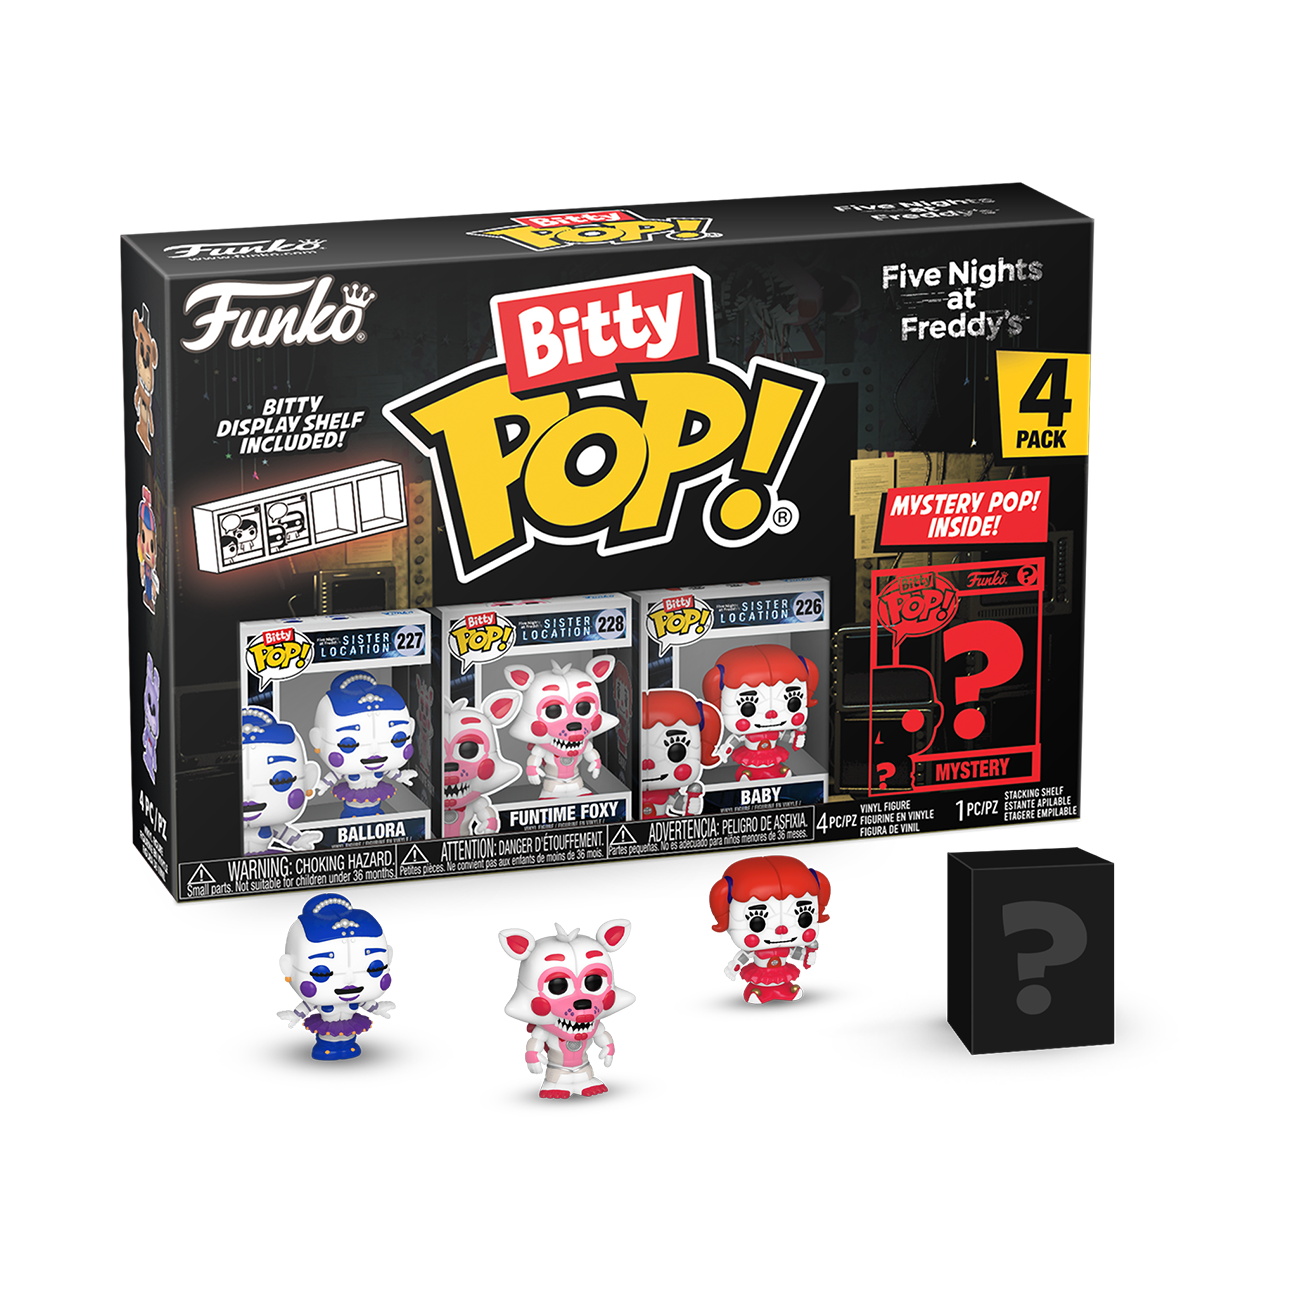 https://media.gamestop.com/i/gamestop/20004309/Funko-Bitty-POP-Five-Nights-at-Freddys-0.9-in-Vinyl-Figure-Set-4-Pack-Ballora-Funtime-Foxy-Baby-Mystery-Pop?$pdp$